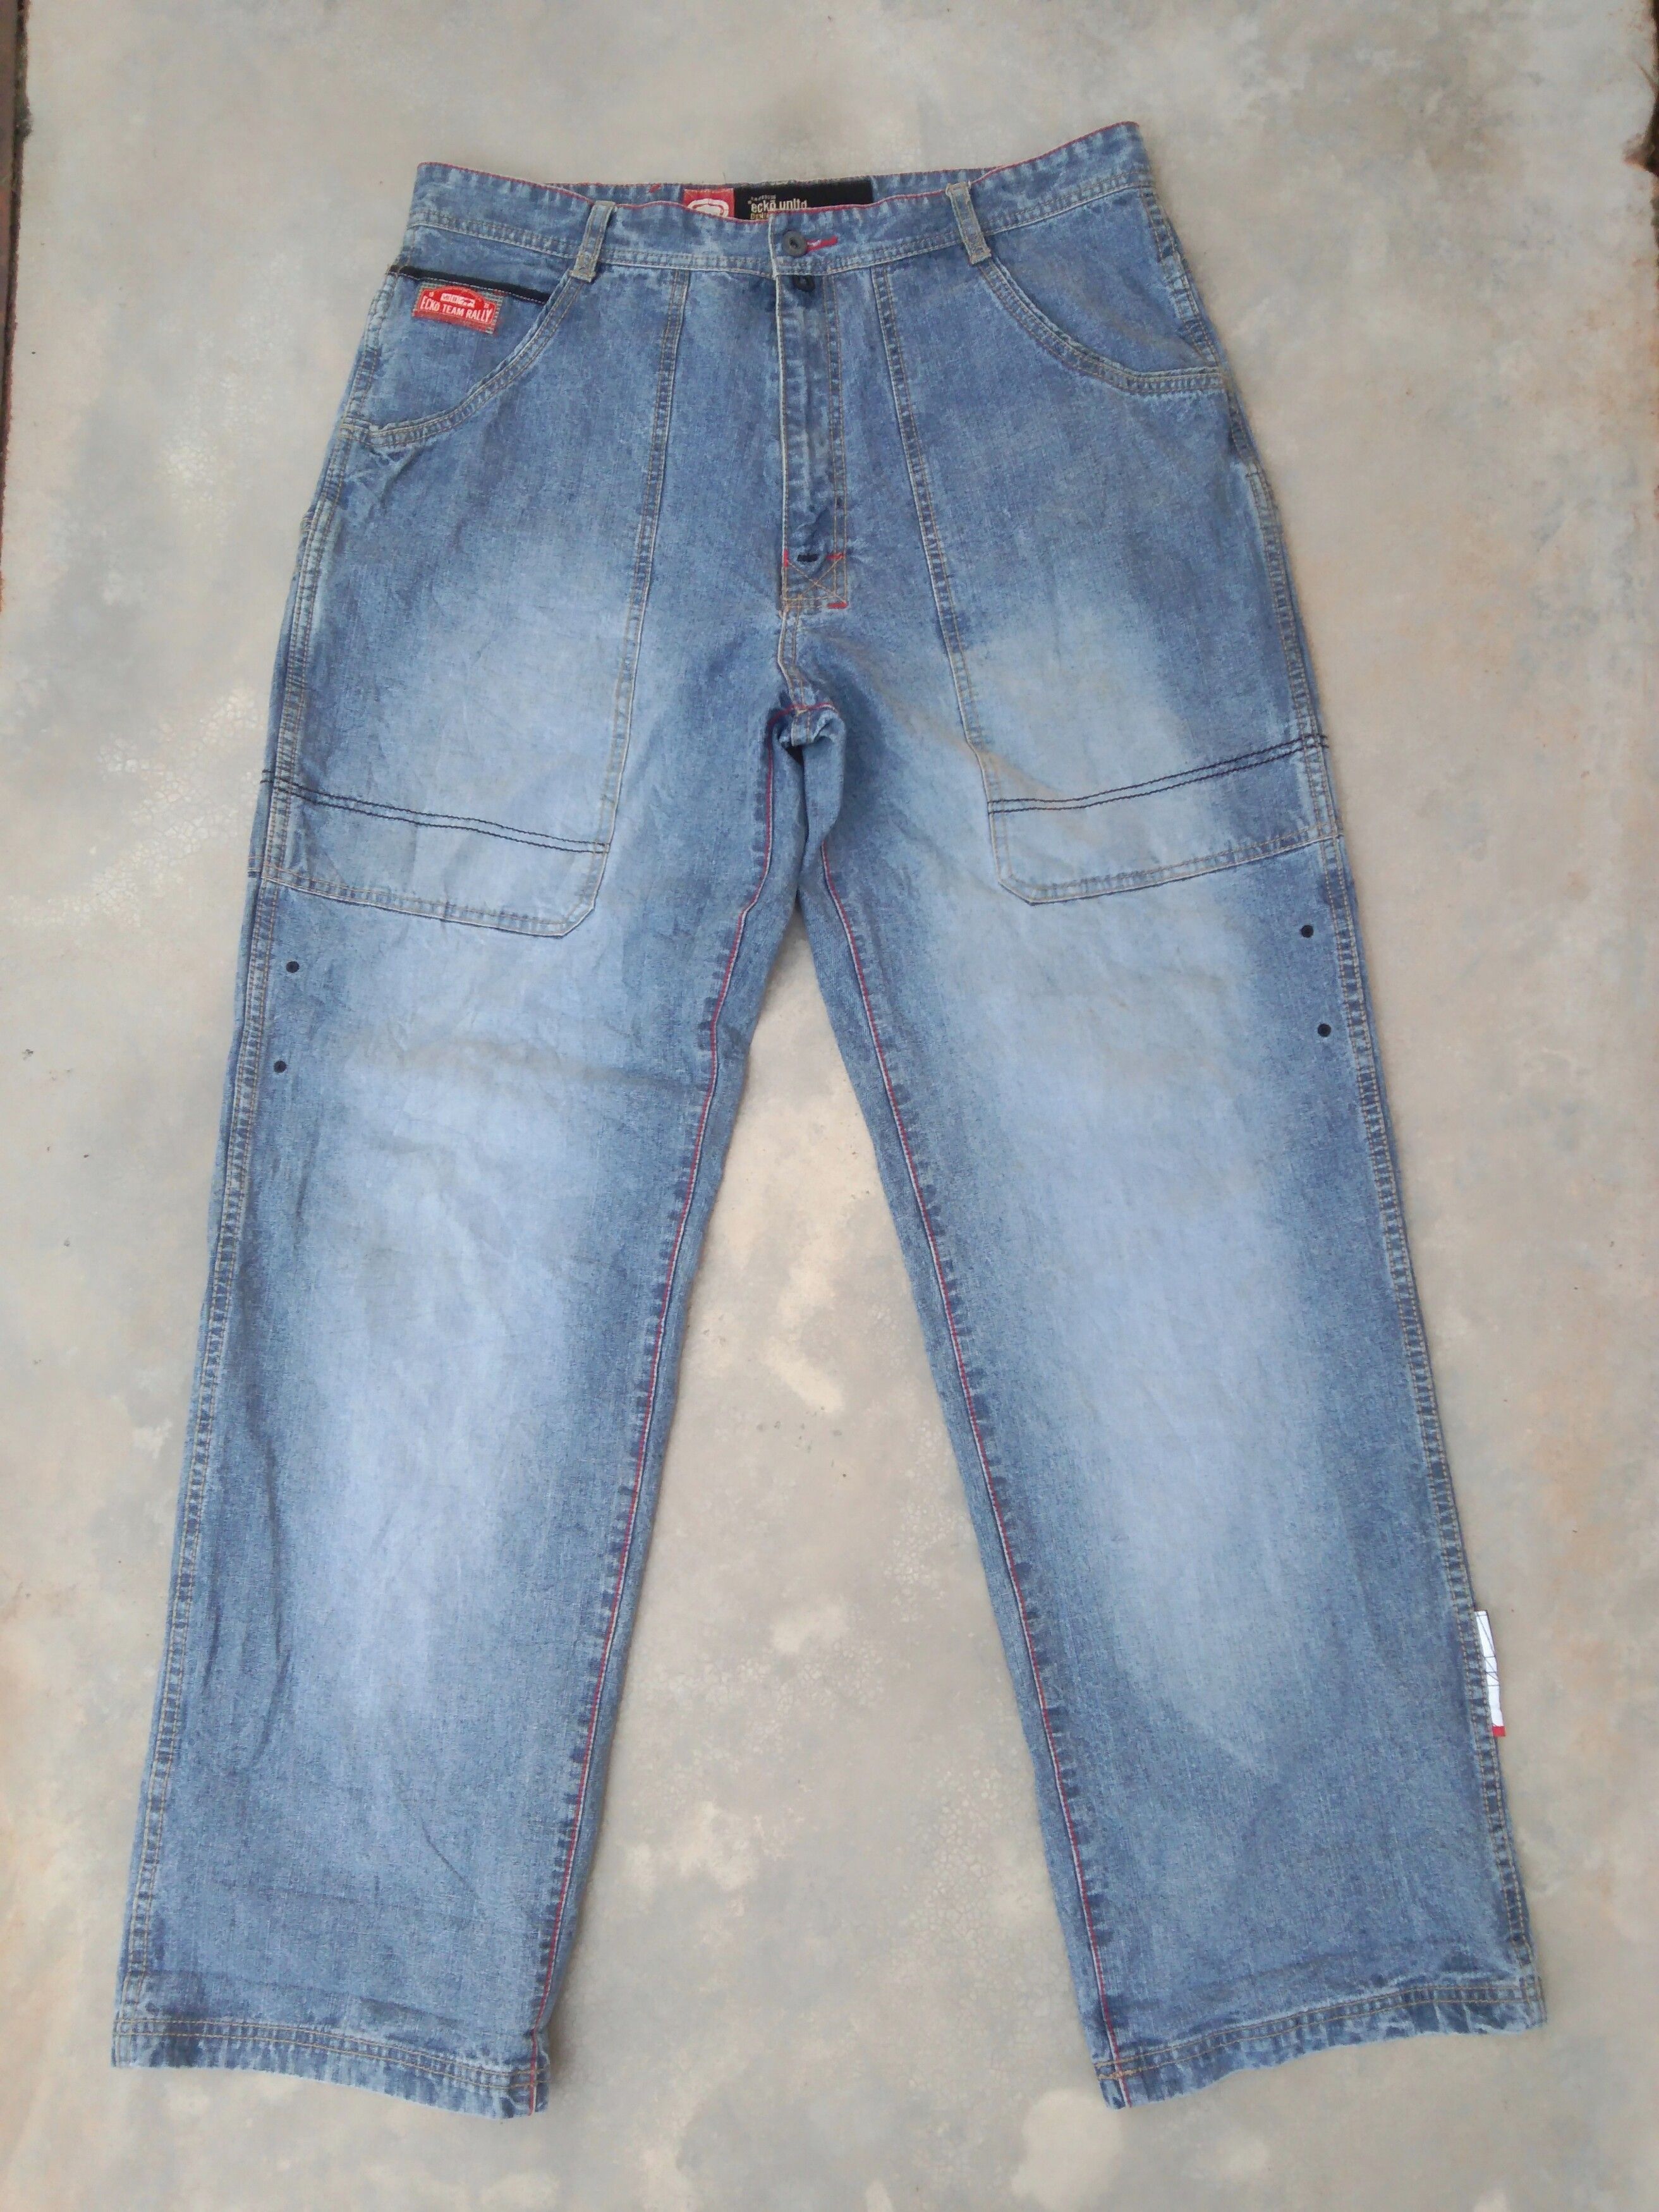 Ecko Unltd. Vintage Ecko Unltd. Jnco Jeans Baggy Style 36x33 | Grailed